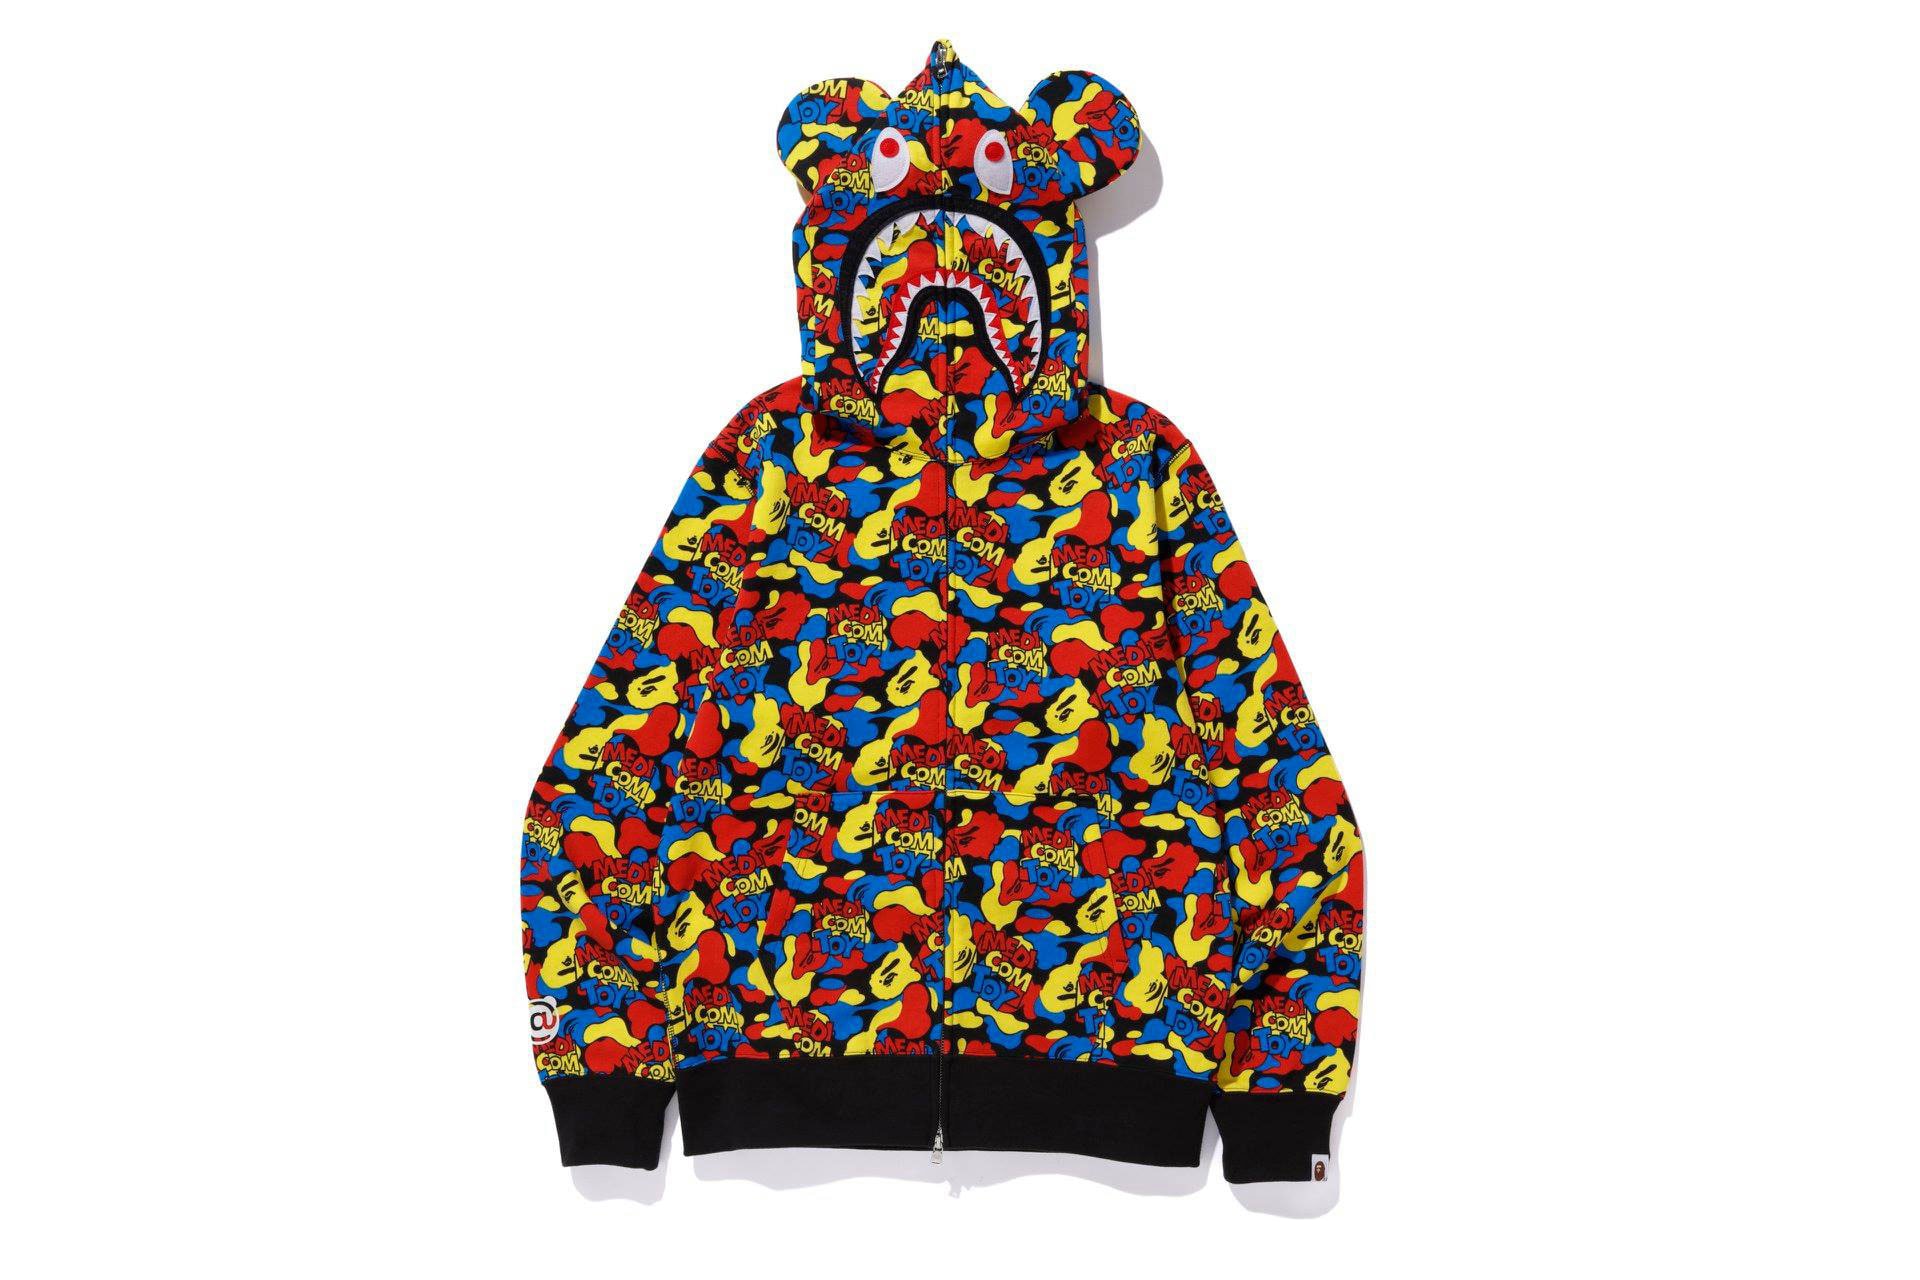 Medicom Toy x BAPE SS19 Capsule a bathing ape shark hoodie bearbrick t-shirts pillows accessories hoodies